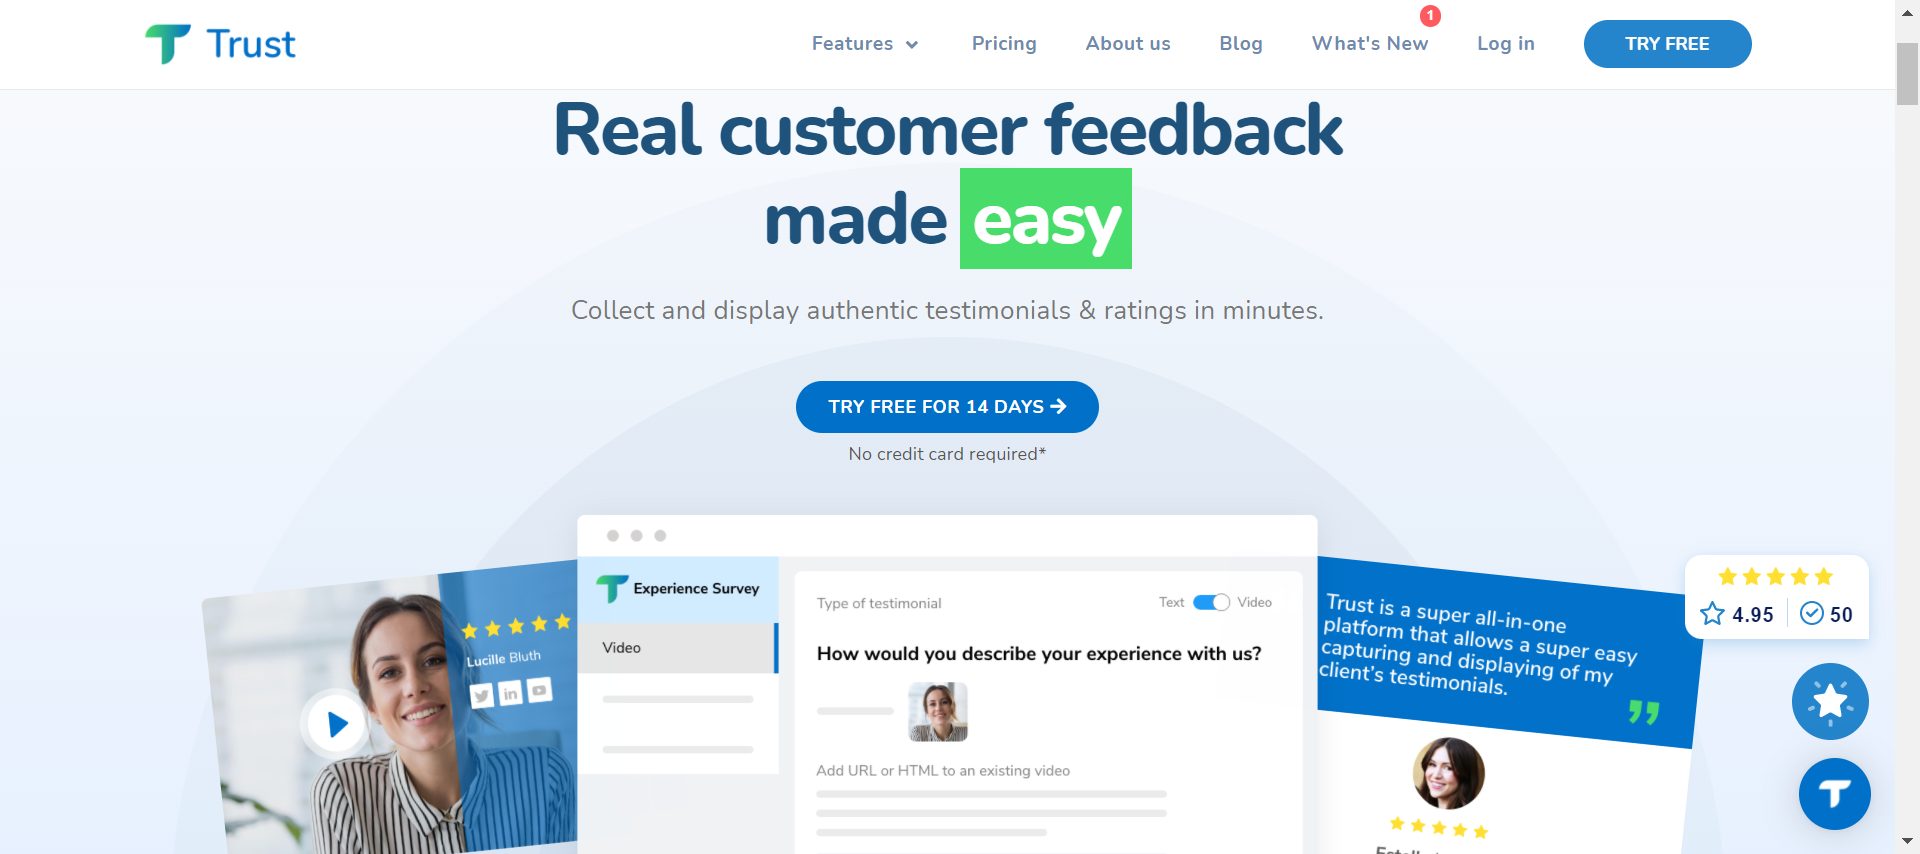 Trust Testimonial Rating Platform for Real Customer Feedback 1